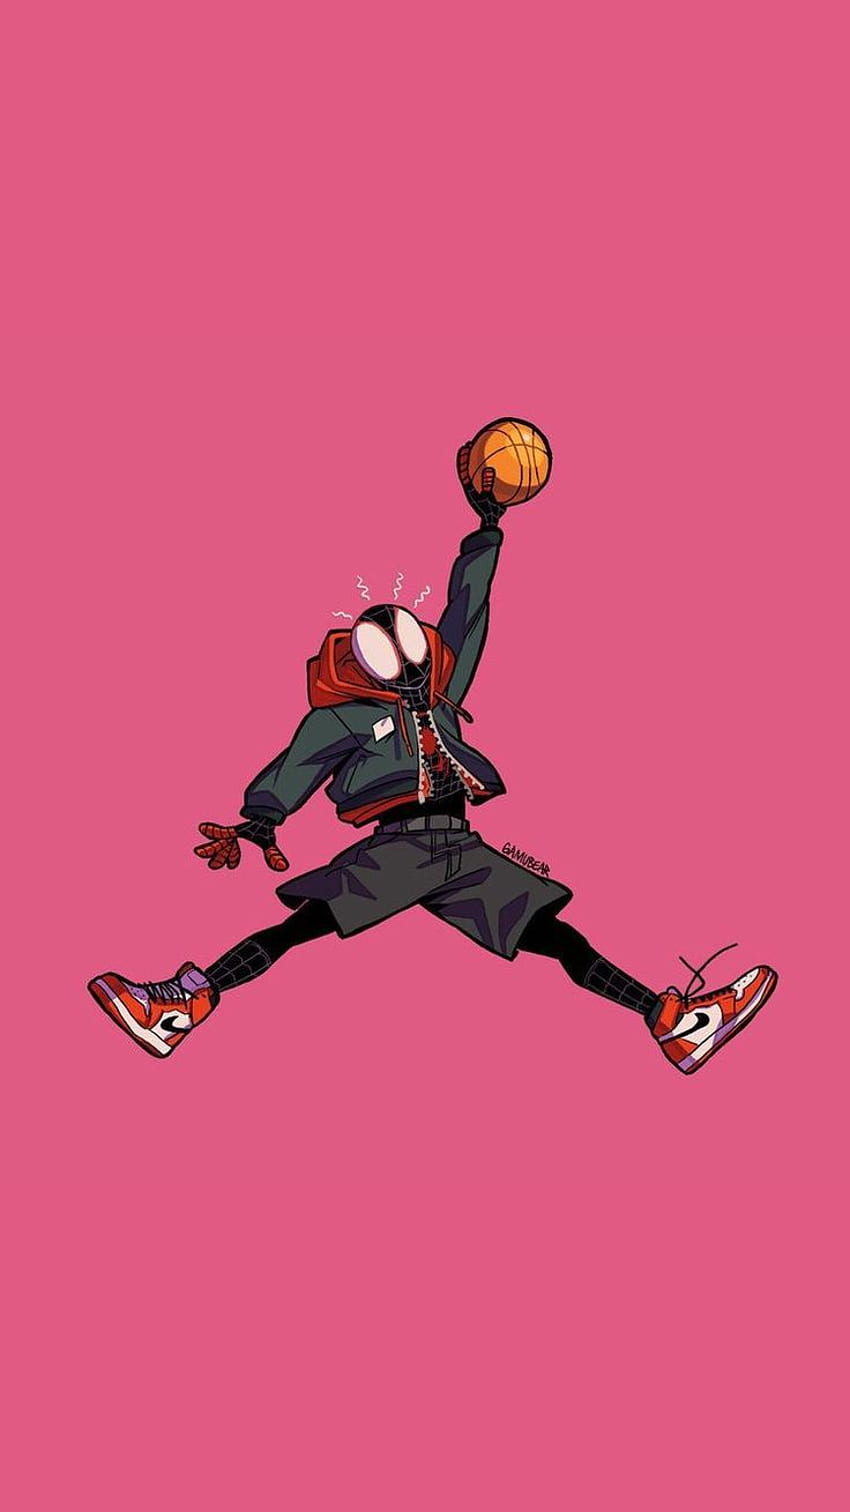 Spiderman basketball, pelota, Deporte, Sipdey-sence, Jordan, Nba fondo de pantalla del teléfono